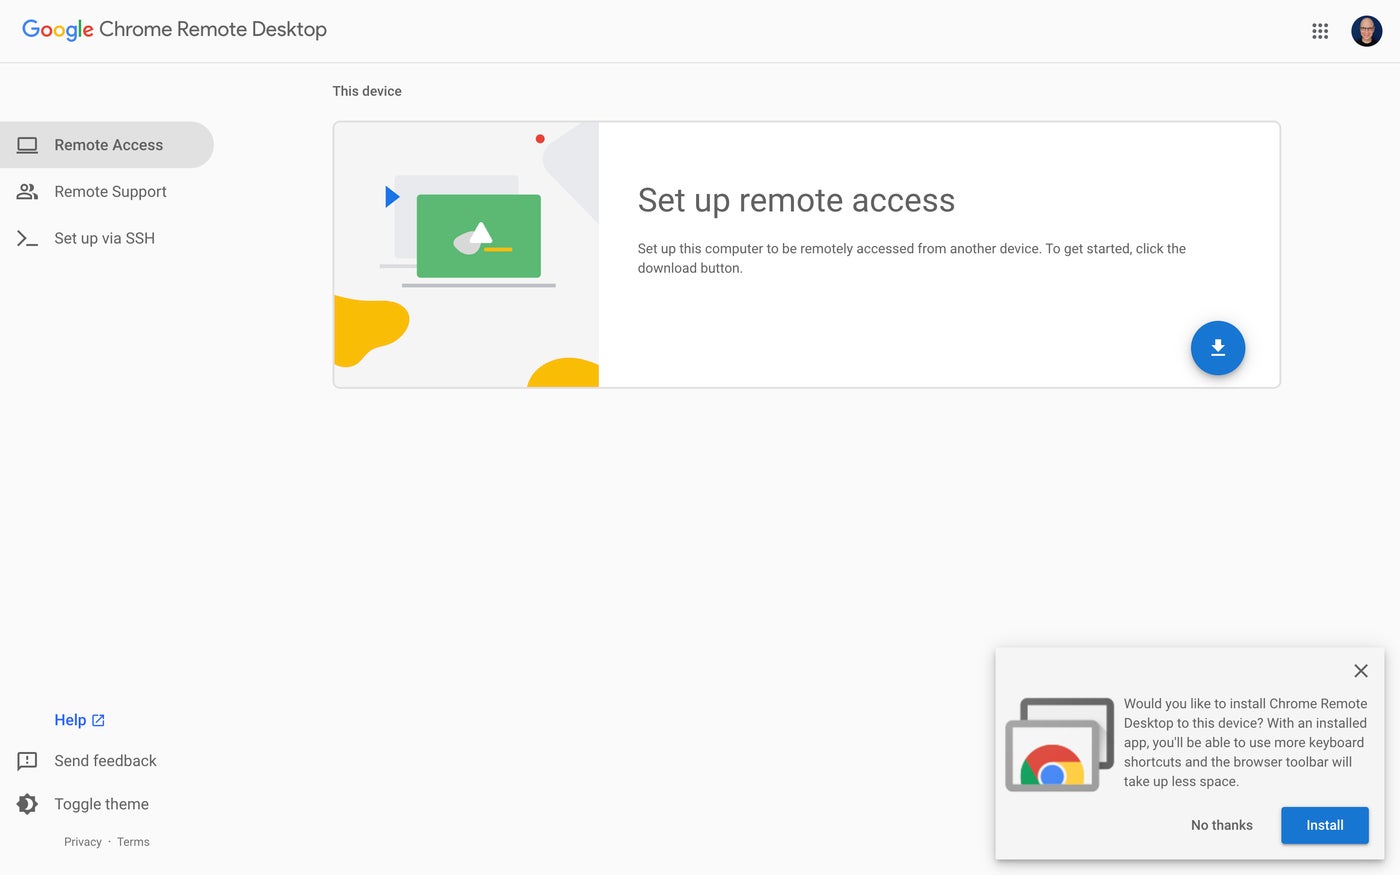 Chrome Remote Desktop configuration options to set up remote access